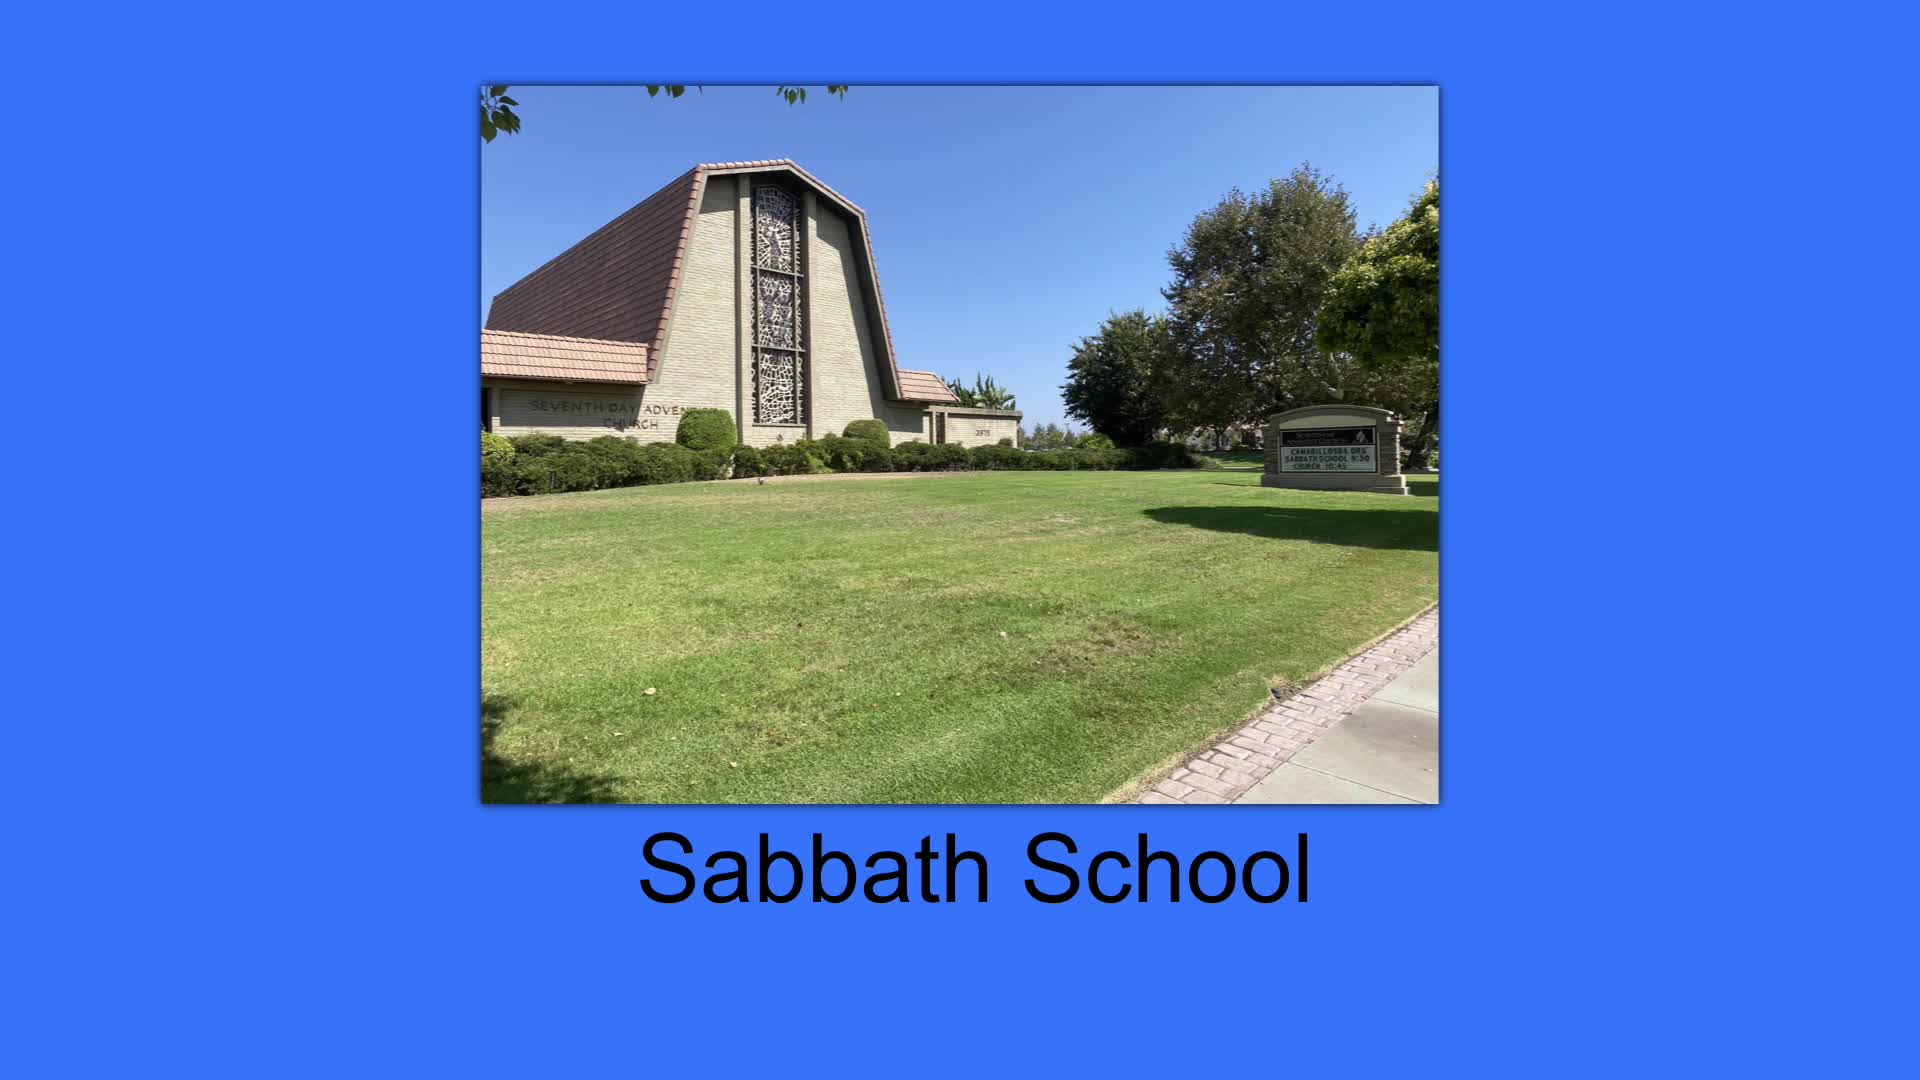 2/13/2021 Sabbath School